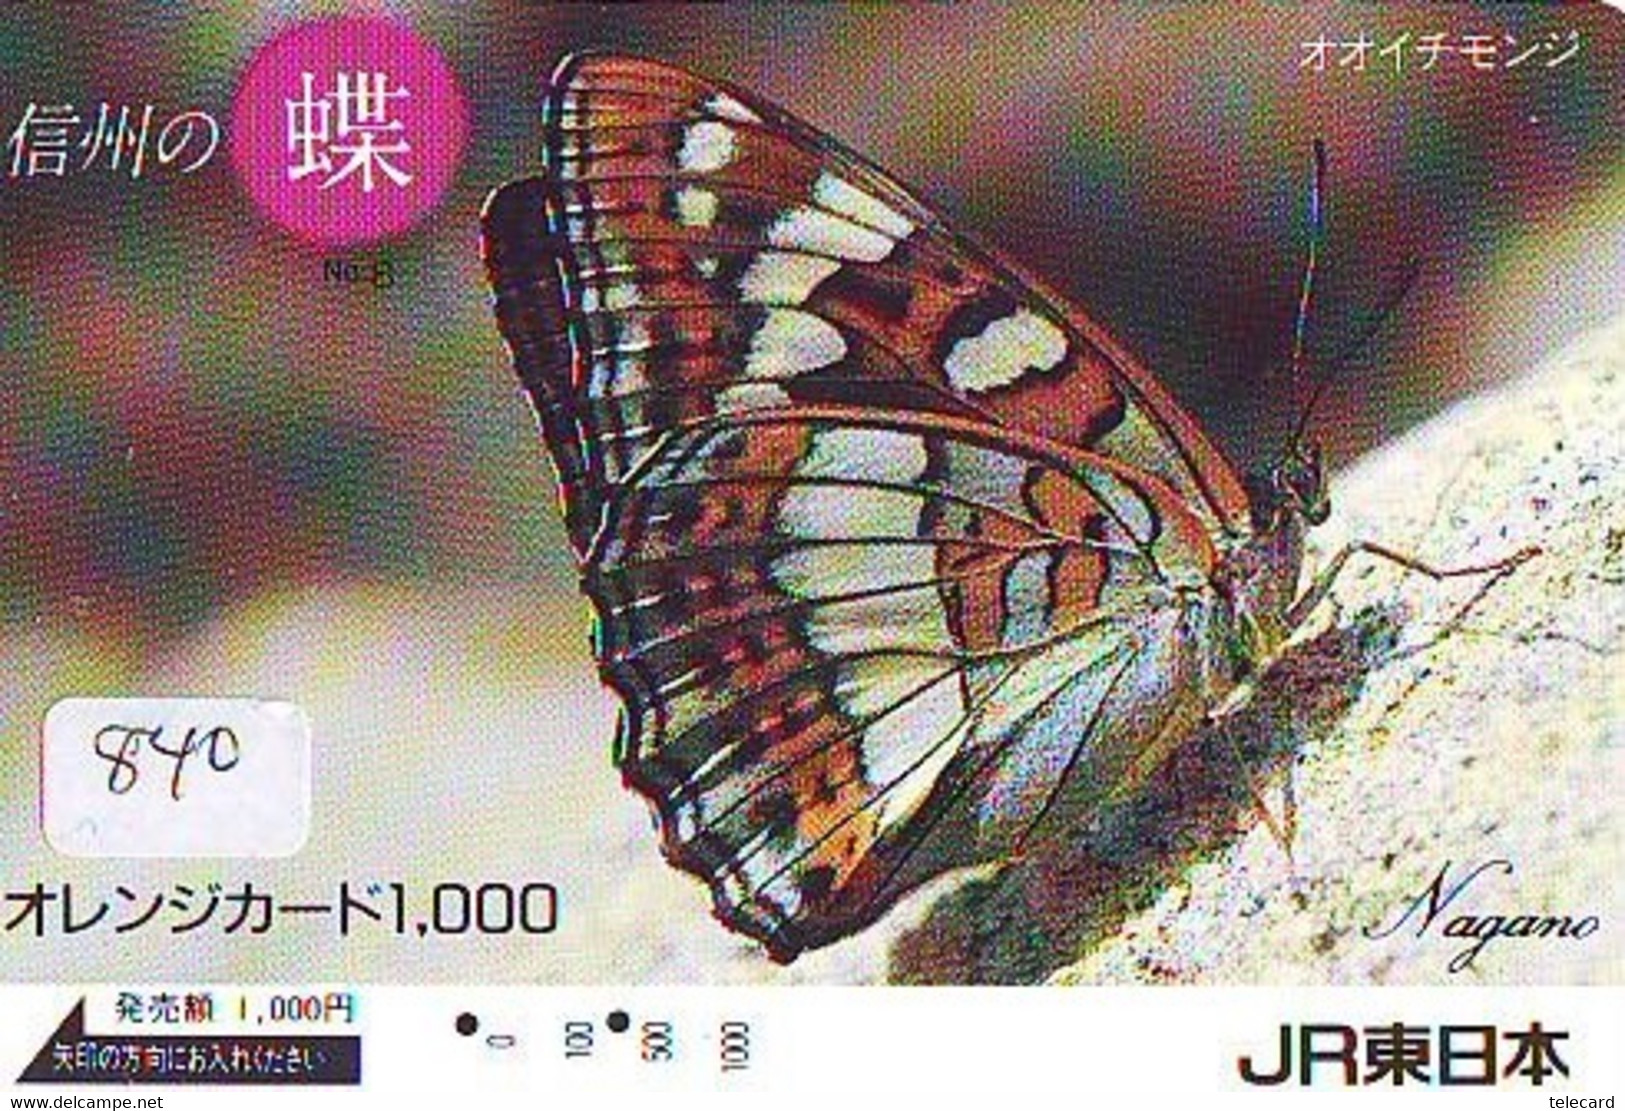 Télécarte Japon * PAPILLON * BUTTERFLY * VLINDER * SCHMETTERLING * ANIMAL (840) PHONECARD JAPAN * TELEFONKARTE - Butterflies